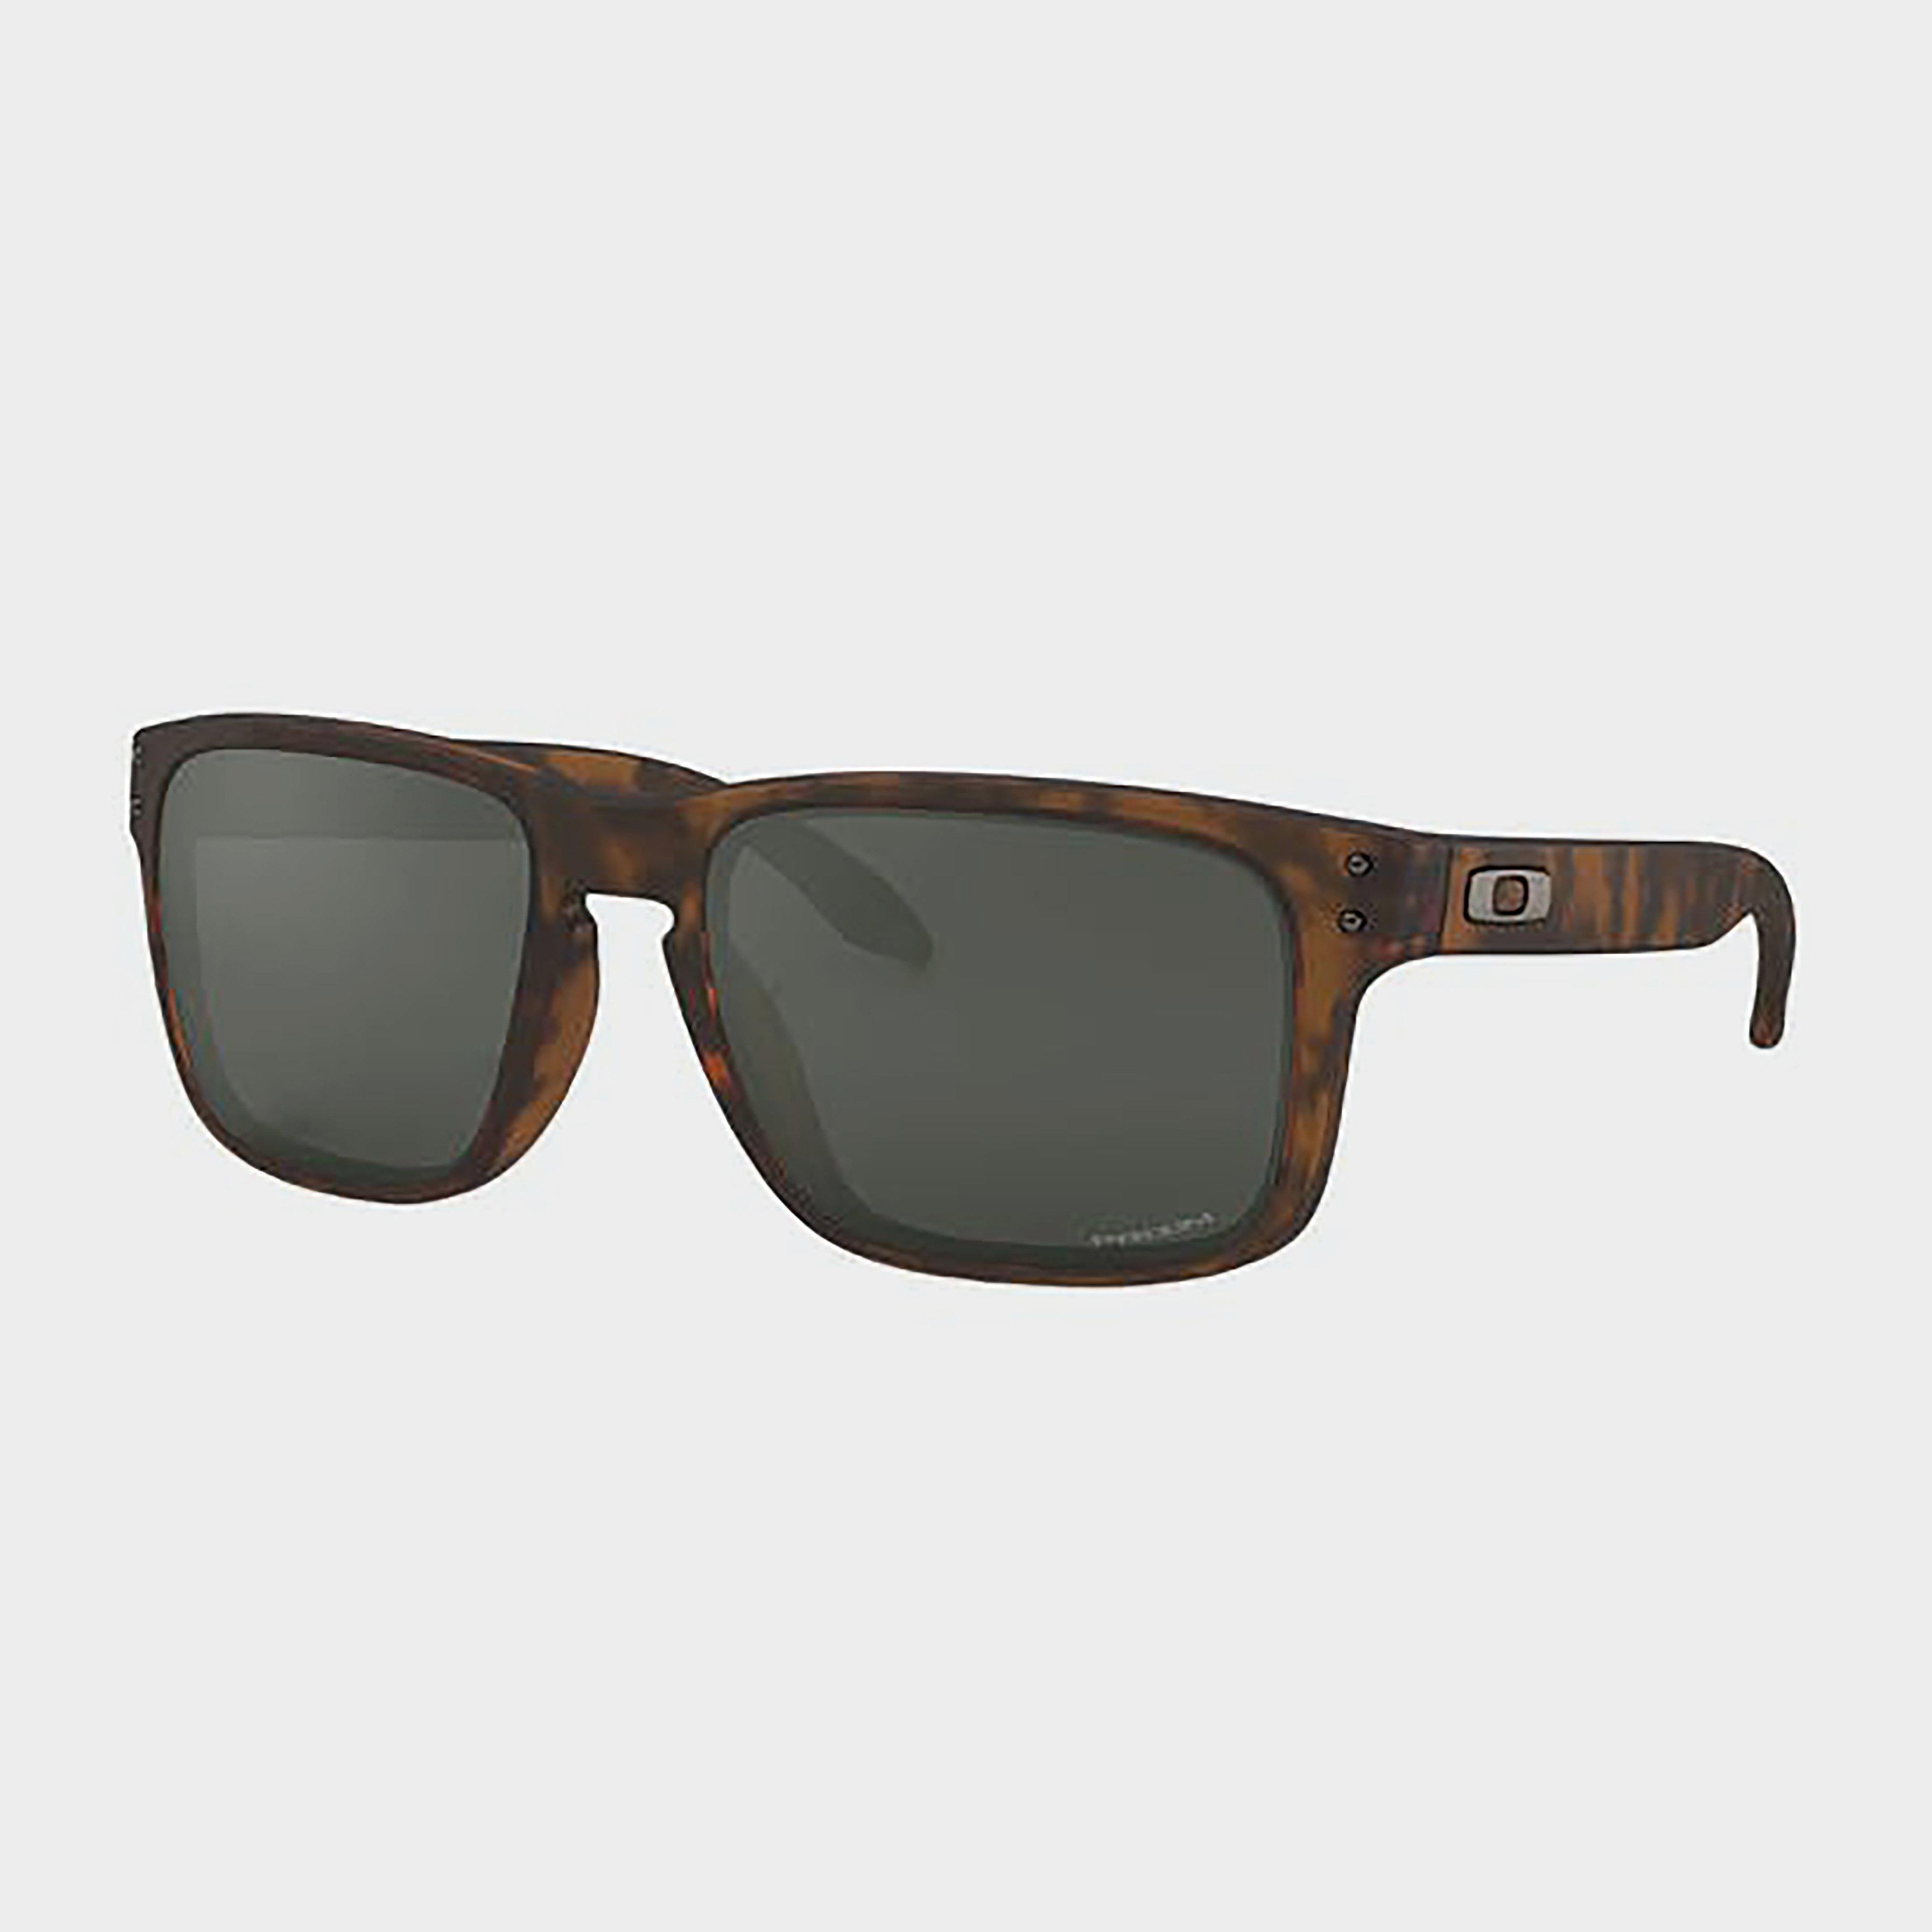  Oakley Holbrook Sunglasses, Brown